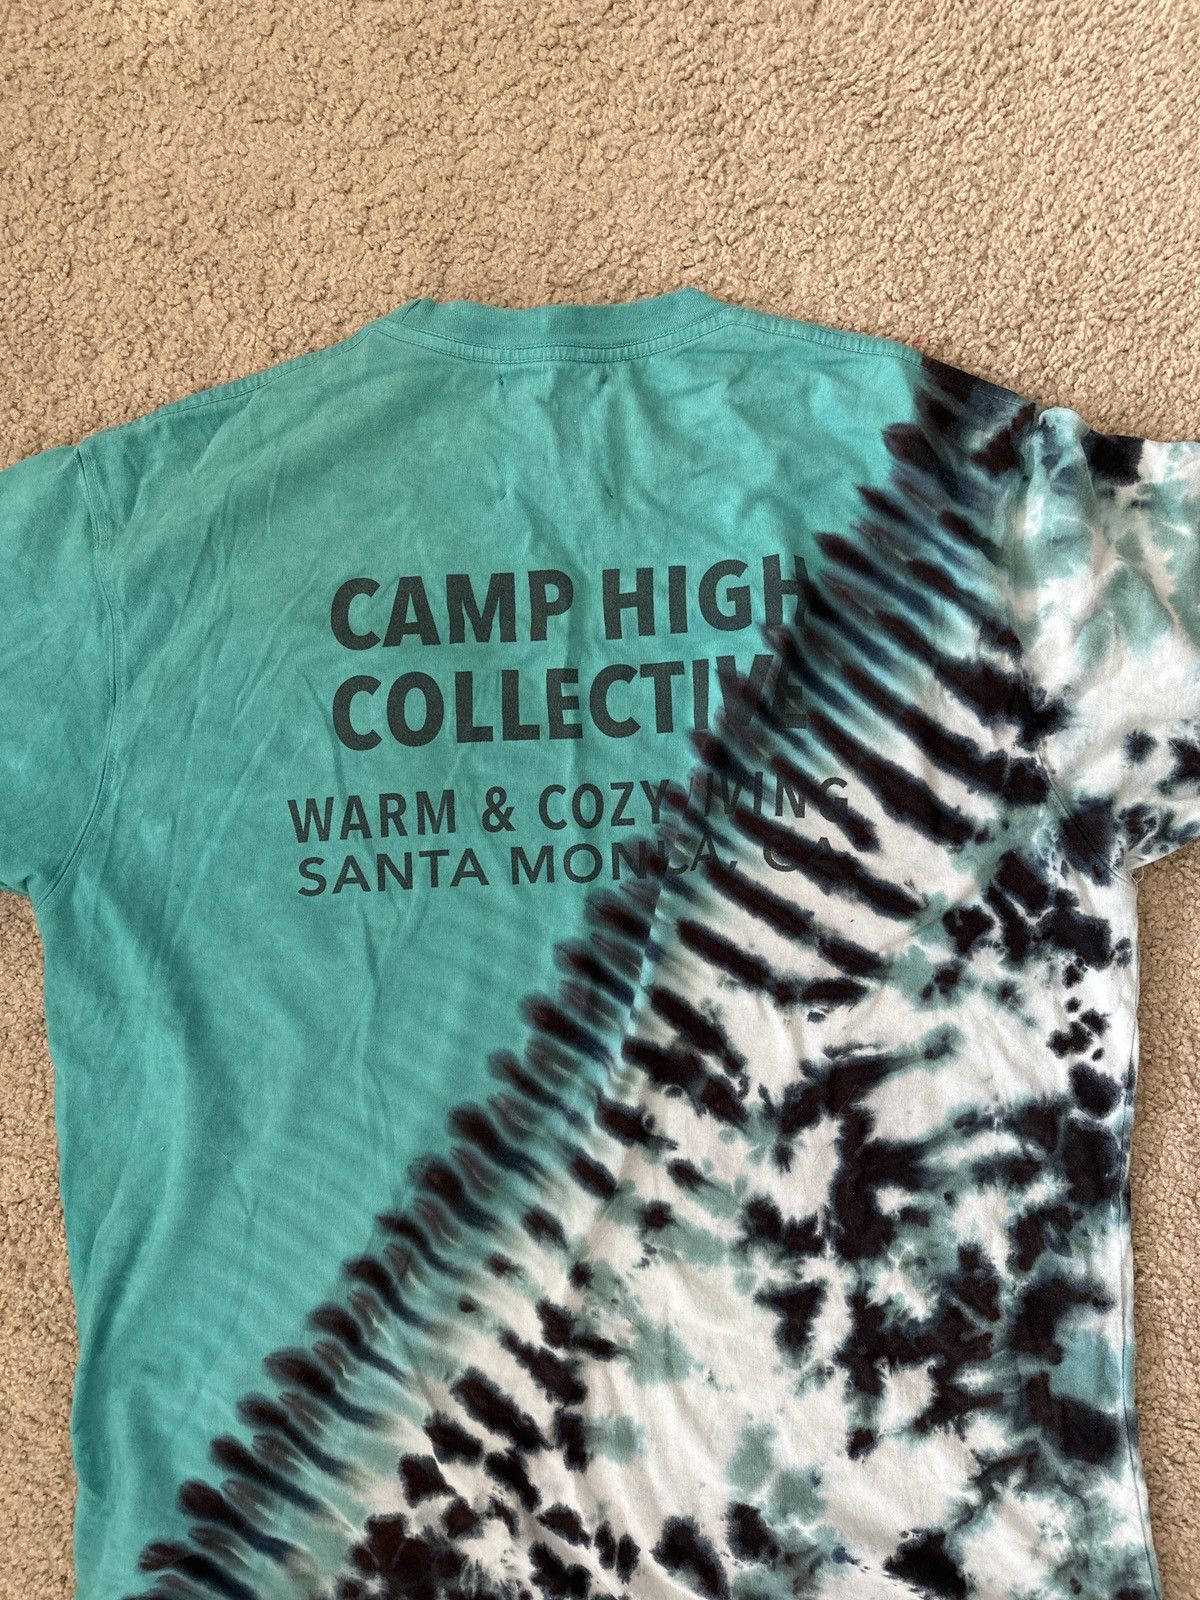 Camp High Camp High Tie Dye Teal Shirt Size US L / EU 52-54 / 3 - 4 Preview